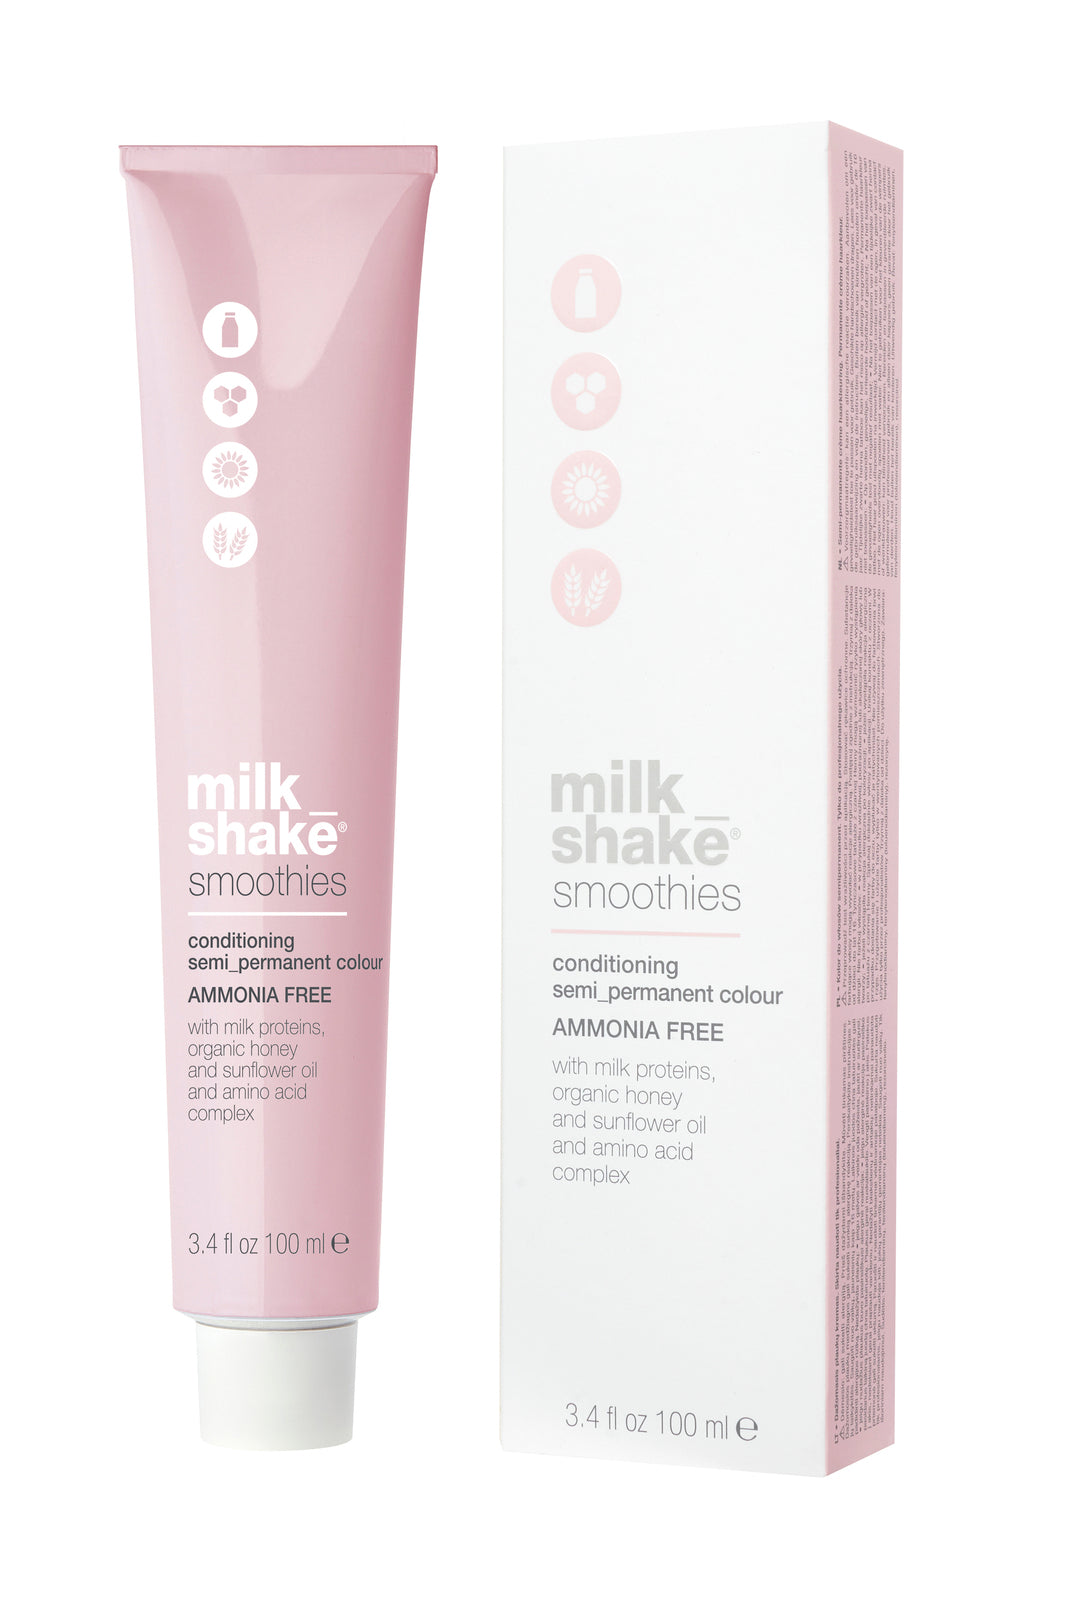 Milkshake smoothies semi-permanent color 4